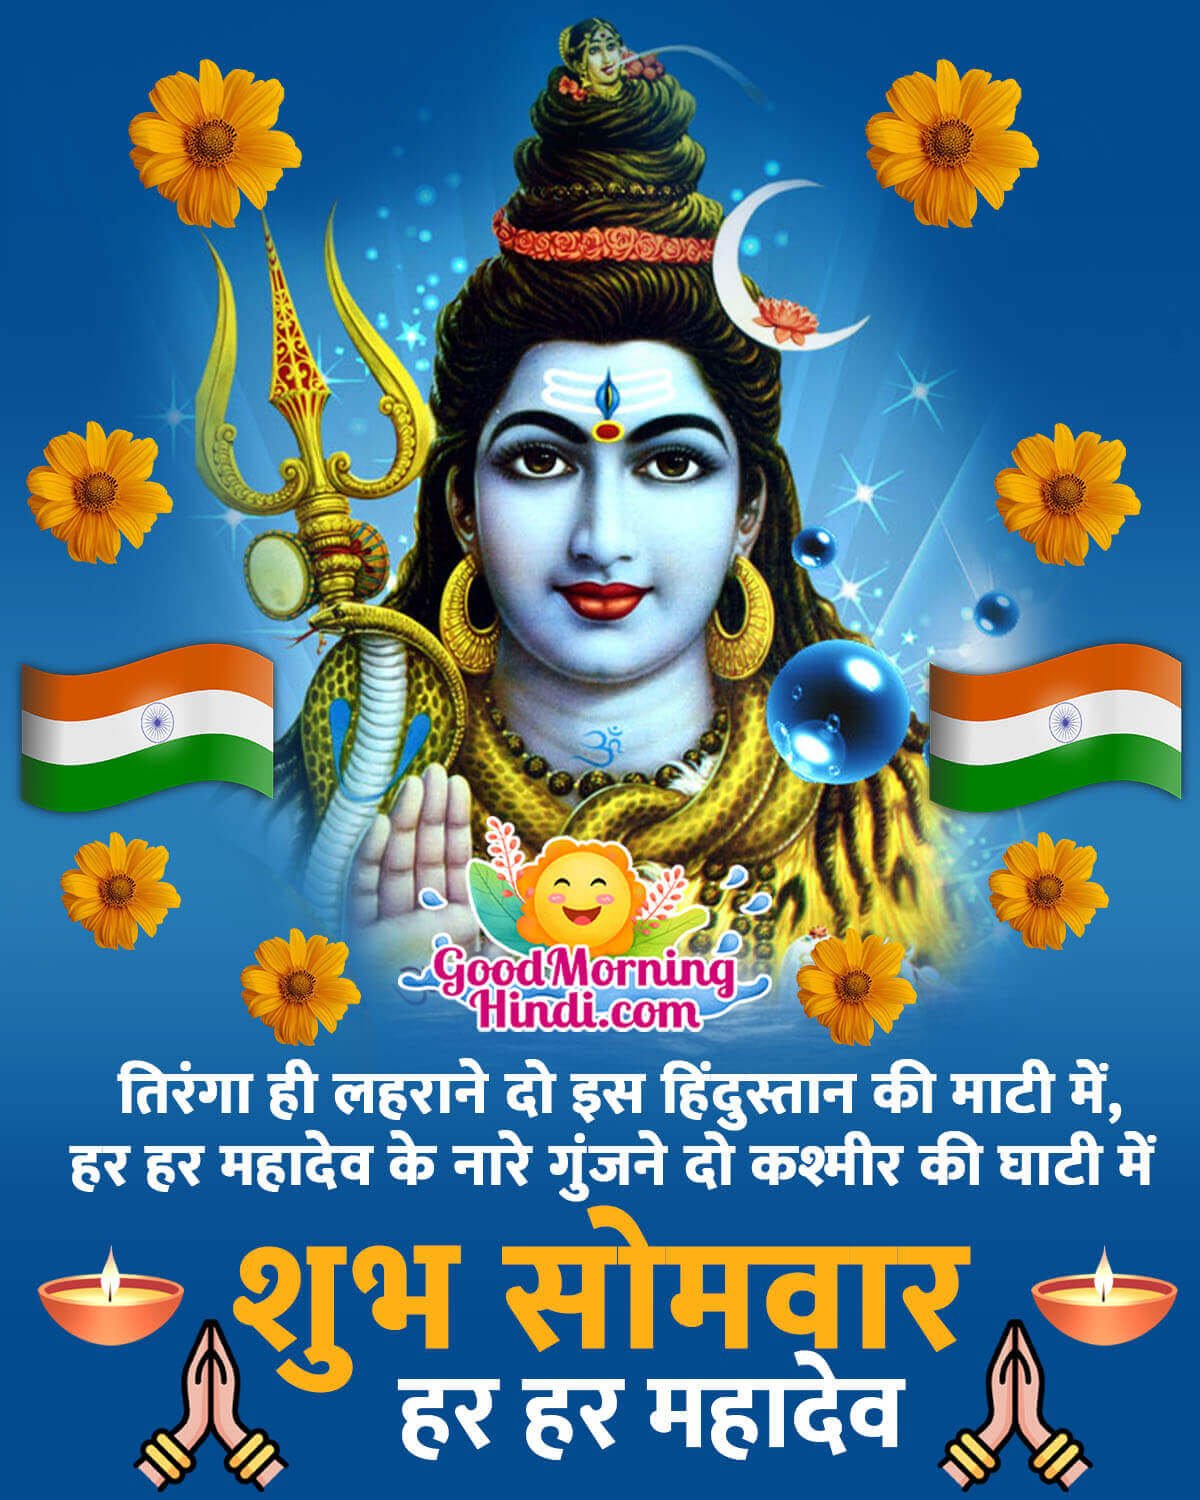 Lord Shiva Monday Good Morning Images in Hindi